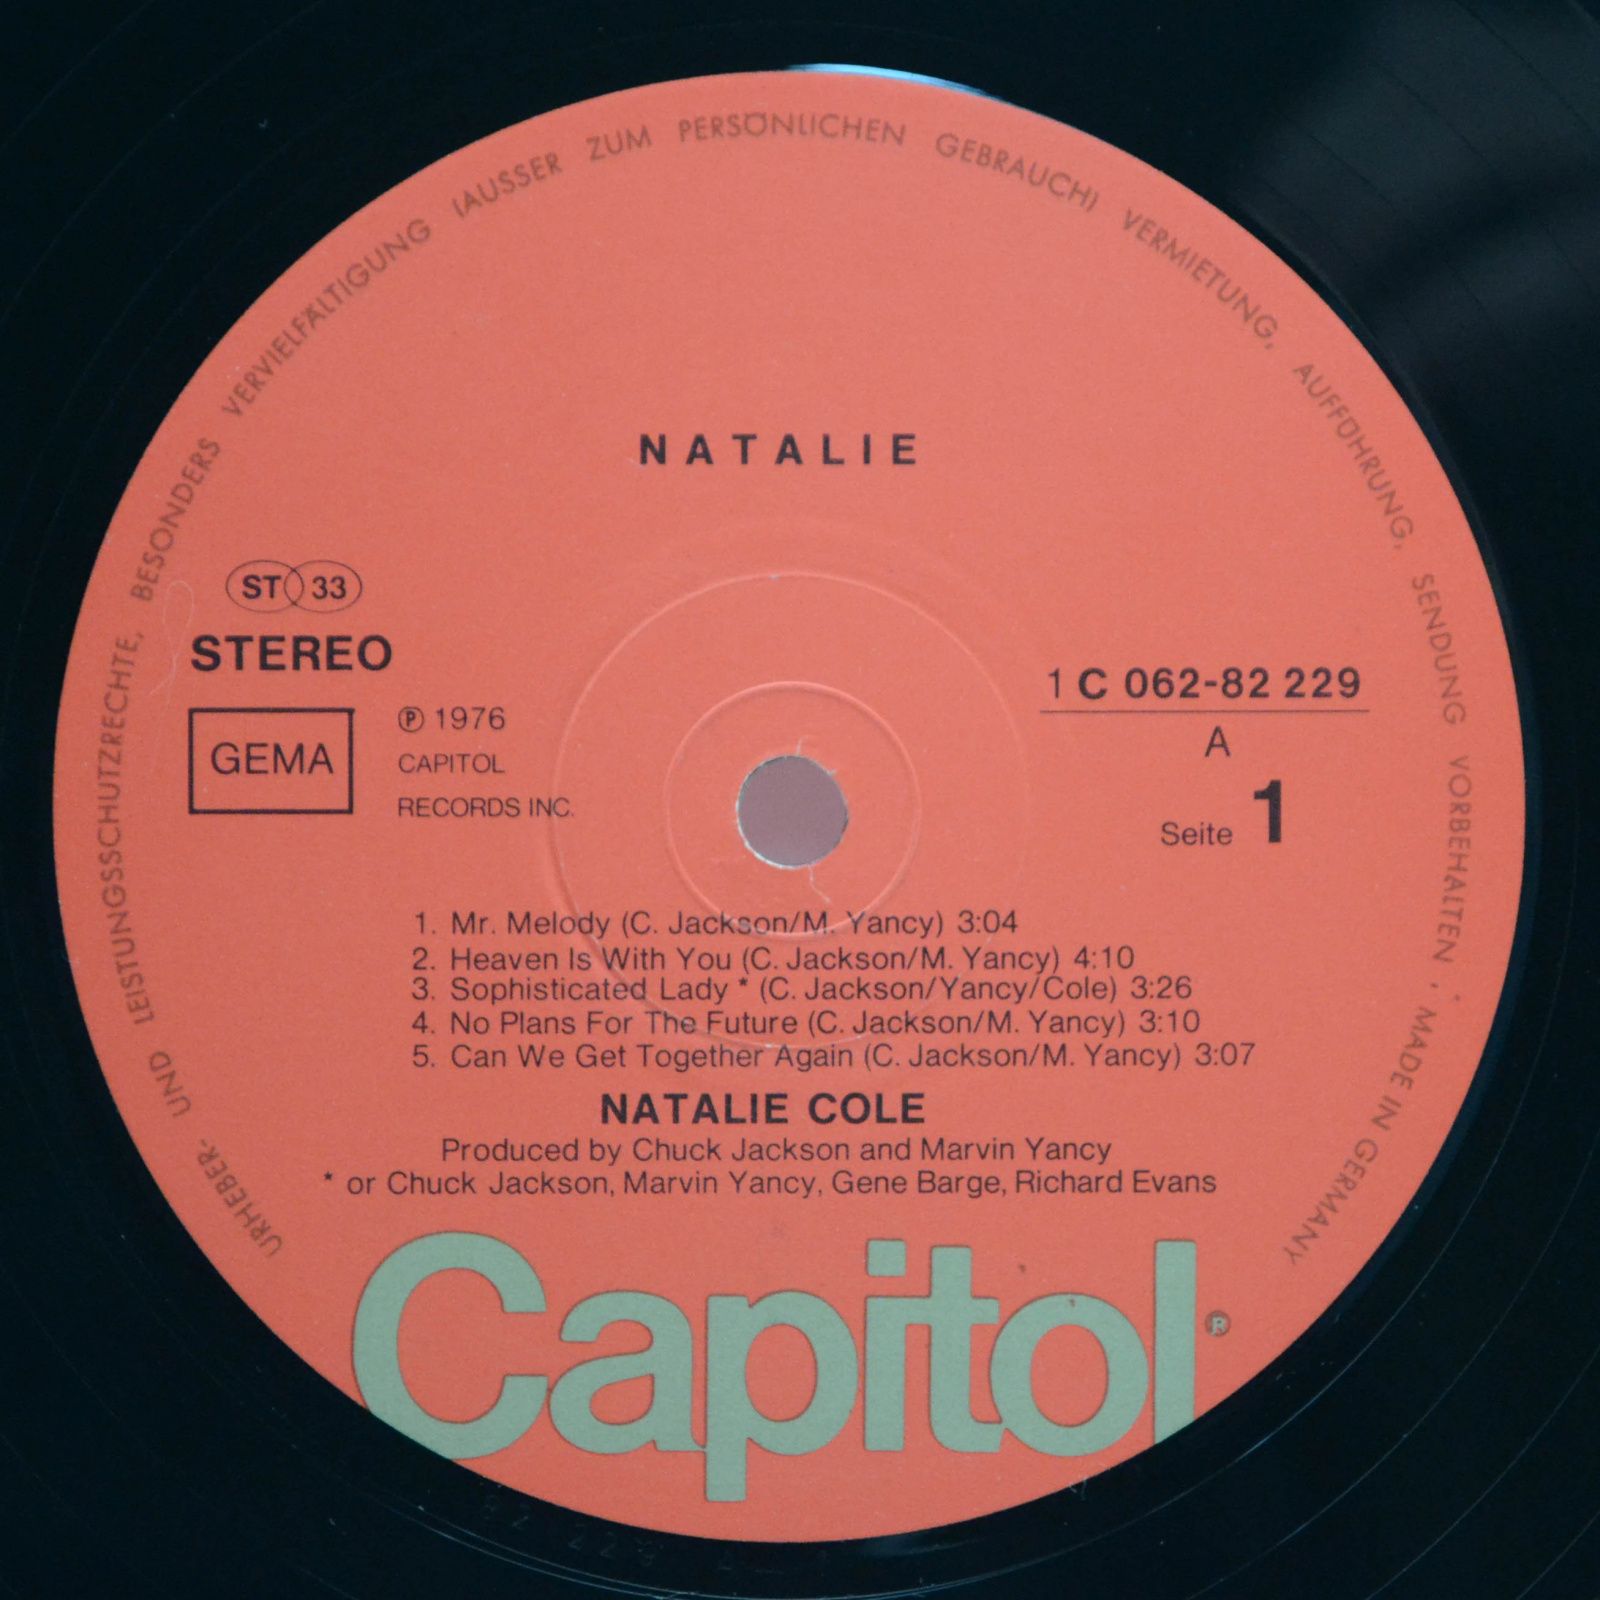 Natalie Cole — Natalie, 1976